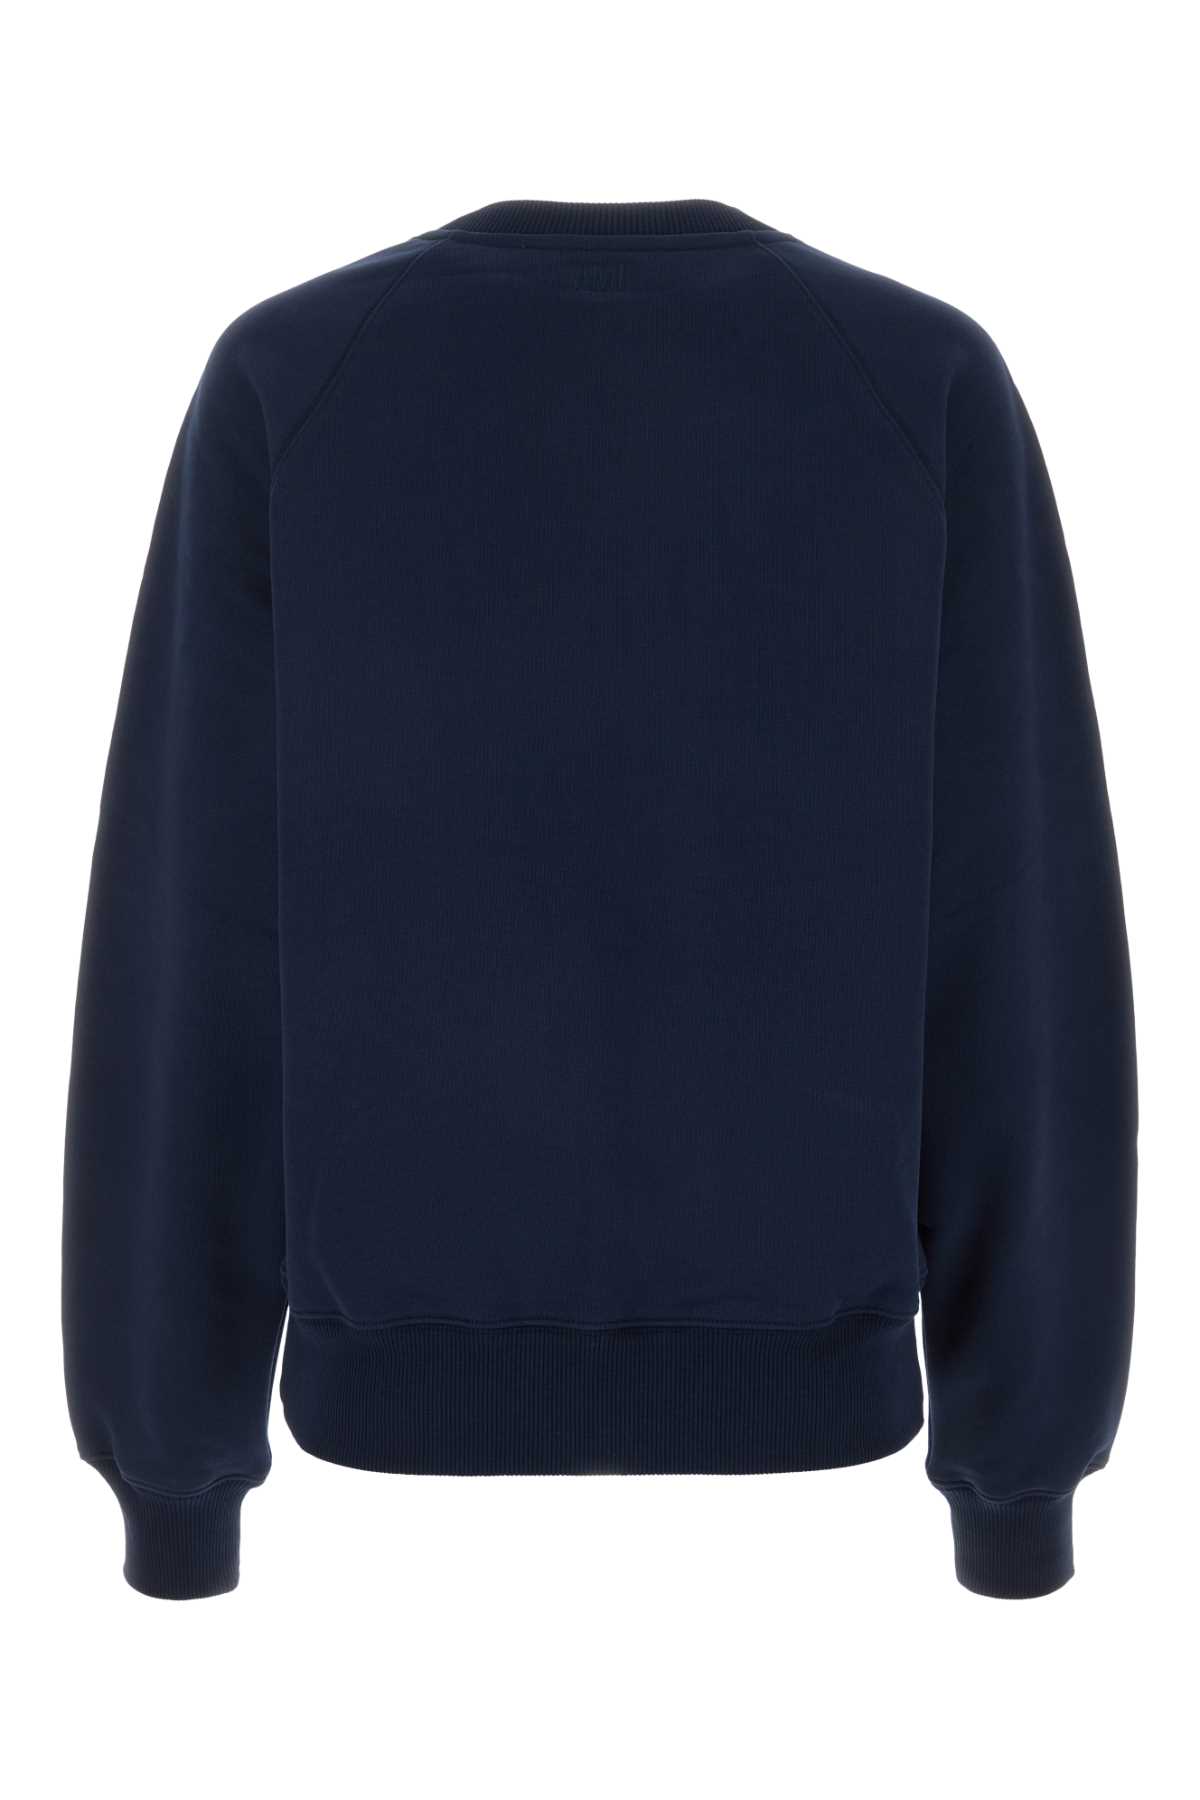 Shop Ami Alexandre Mattiussi Navy Blue Cotton Sweatshirt In Nightblue